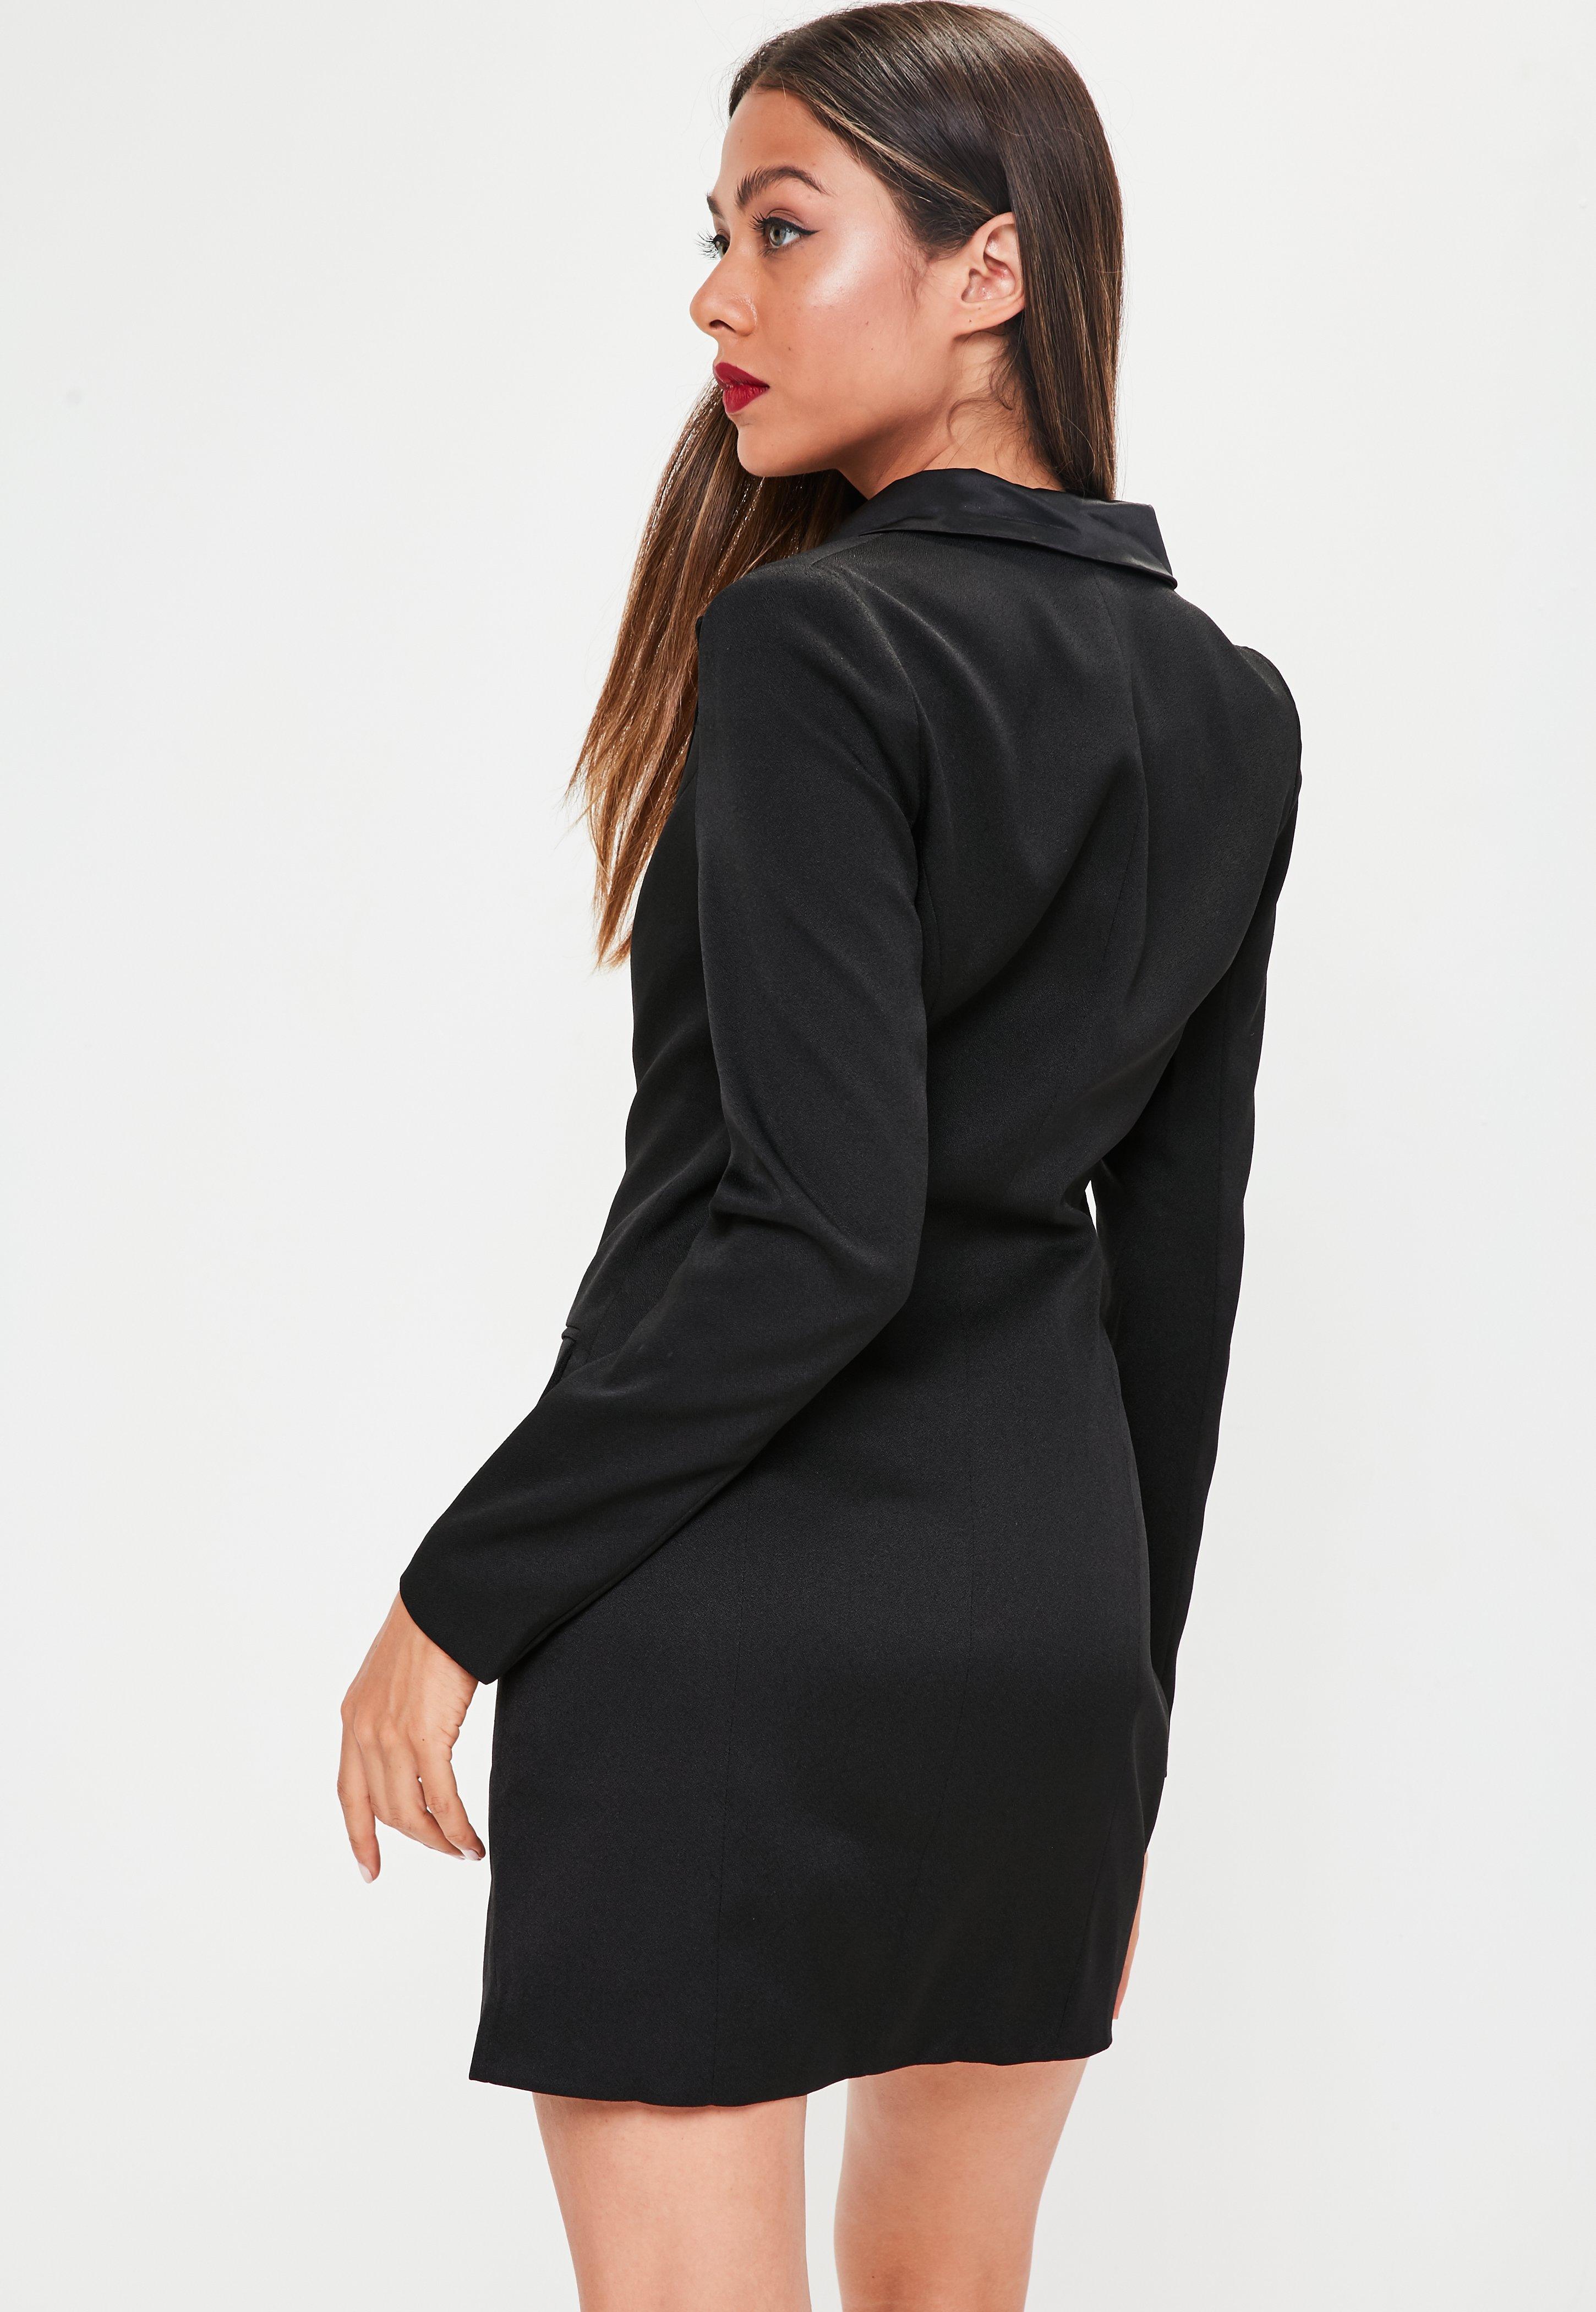 Lyst - Missguided Petite Long Sleeve Tuxedo Dress Black in Black - Save ...